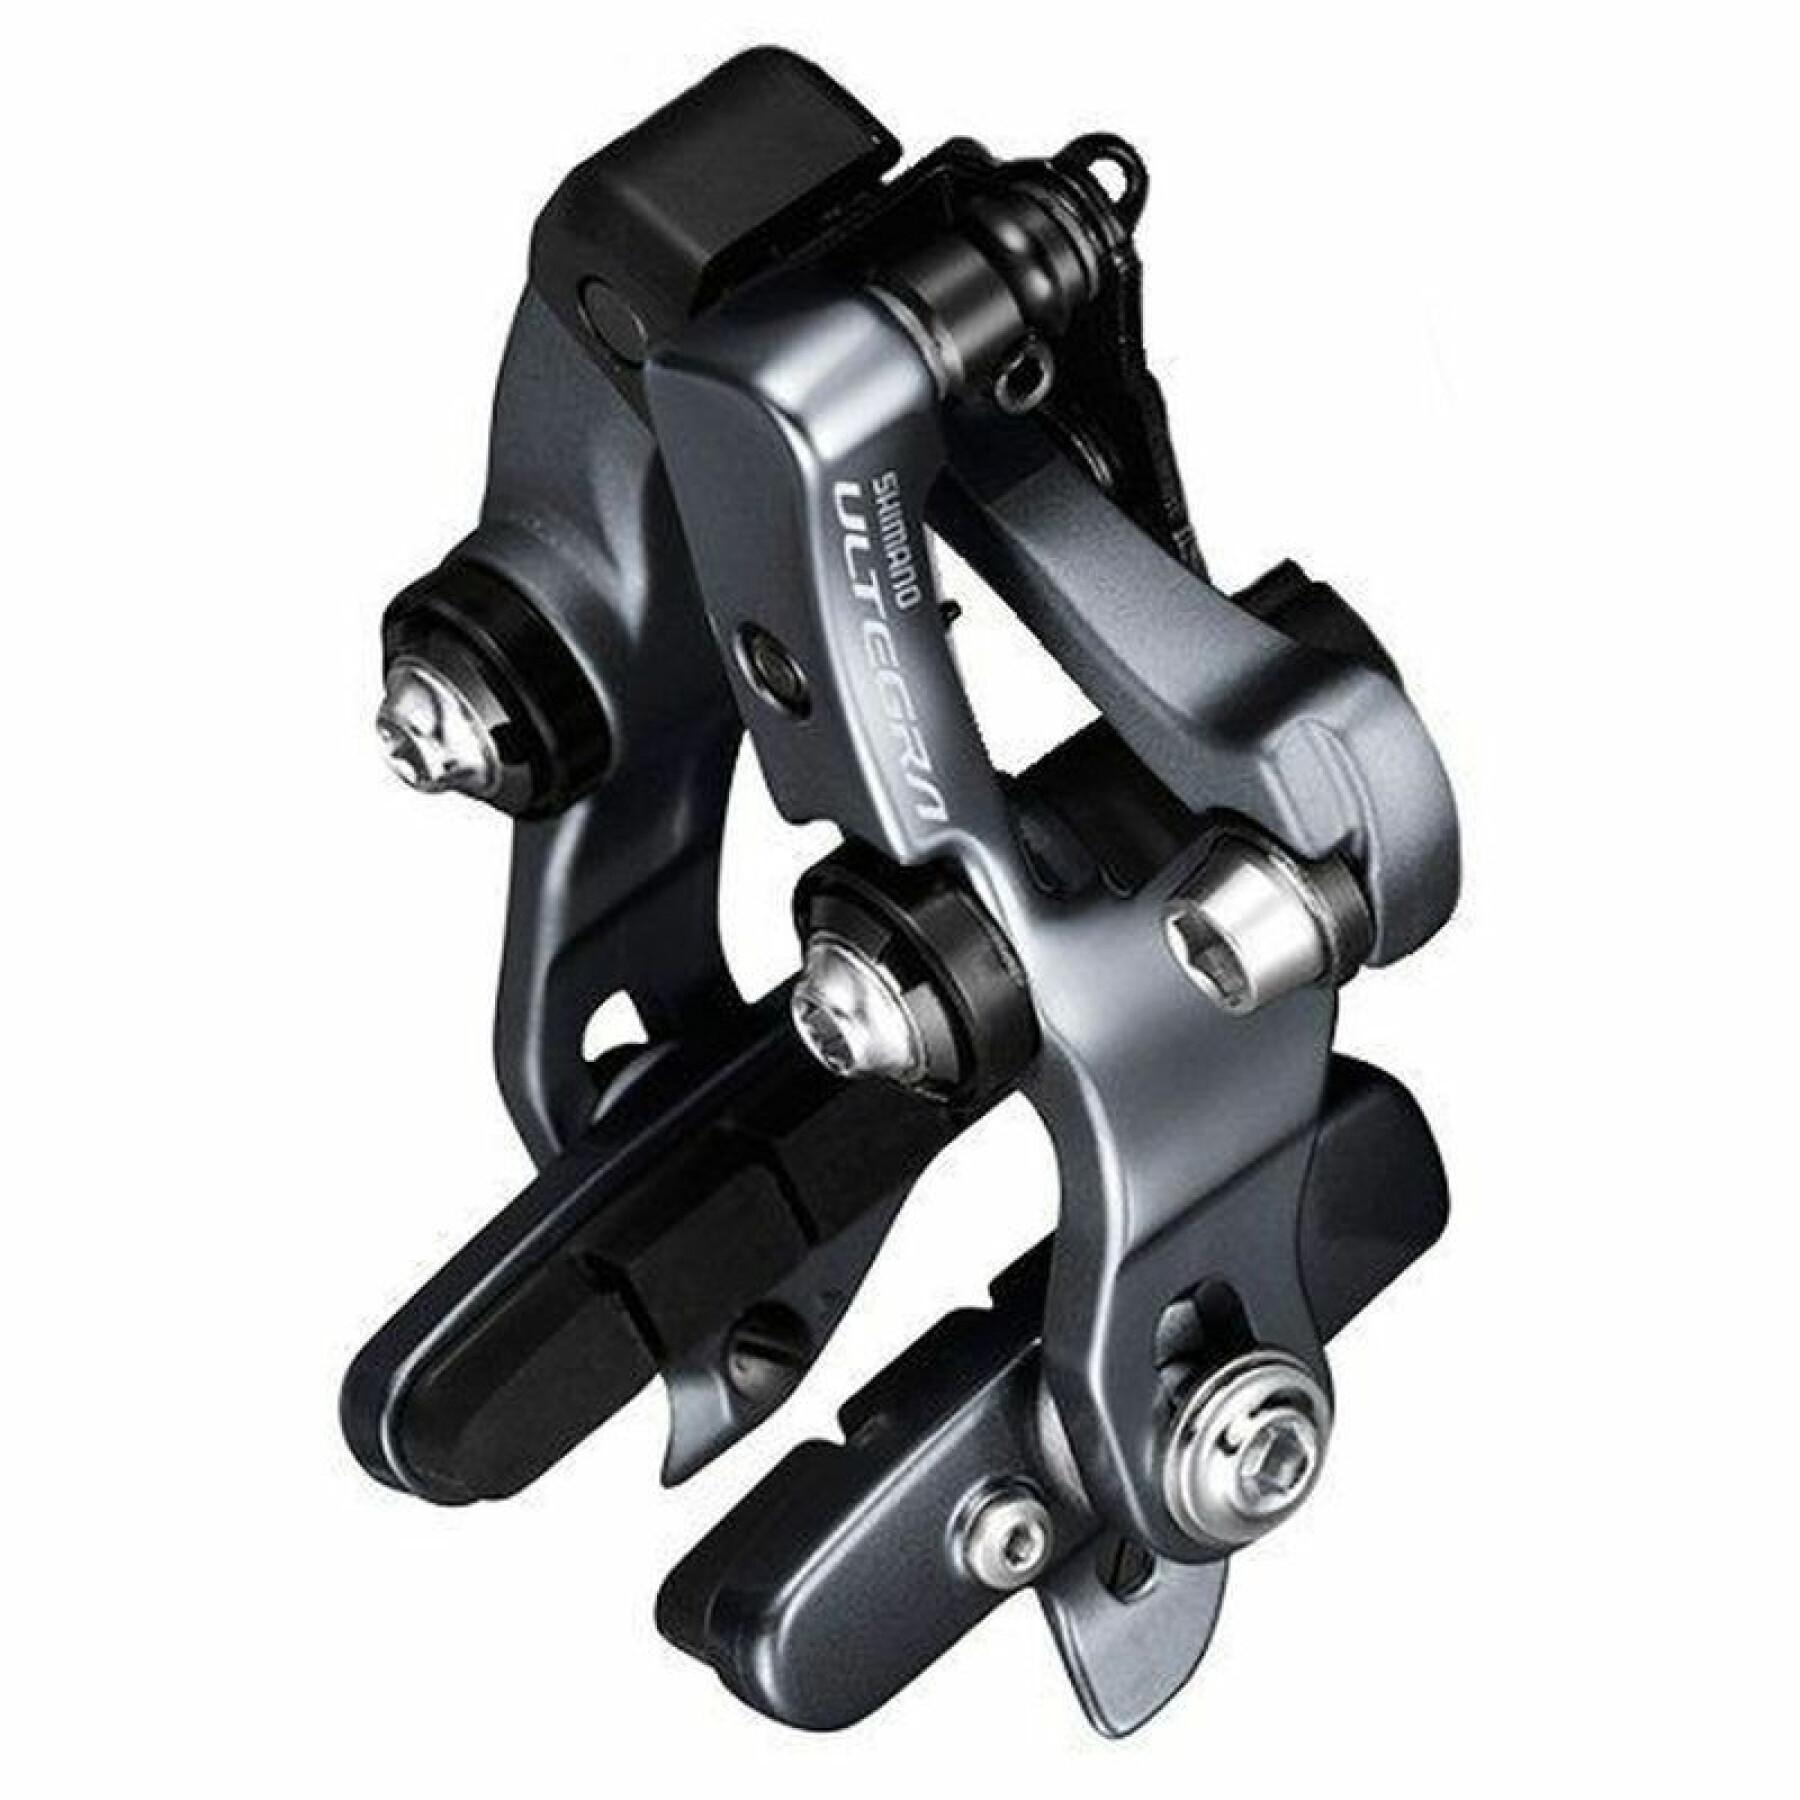 rear brake caliper Shimano br-r8010 ultegra direct mount